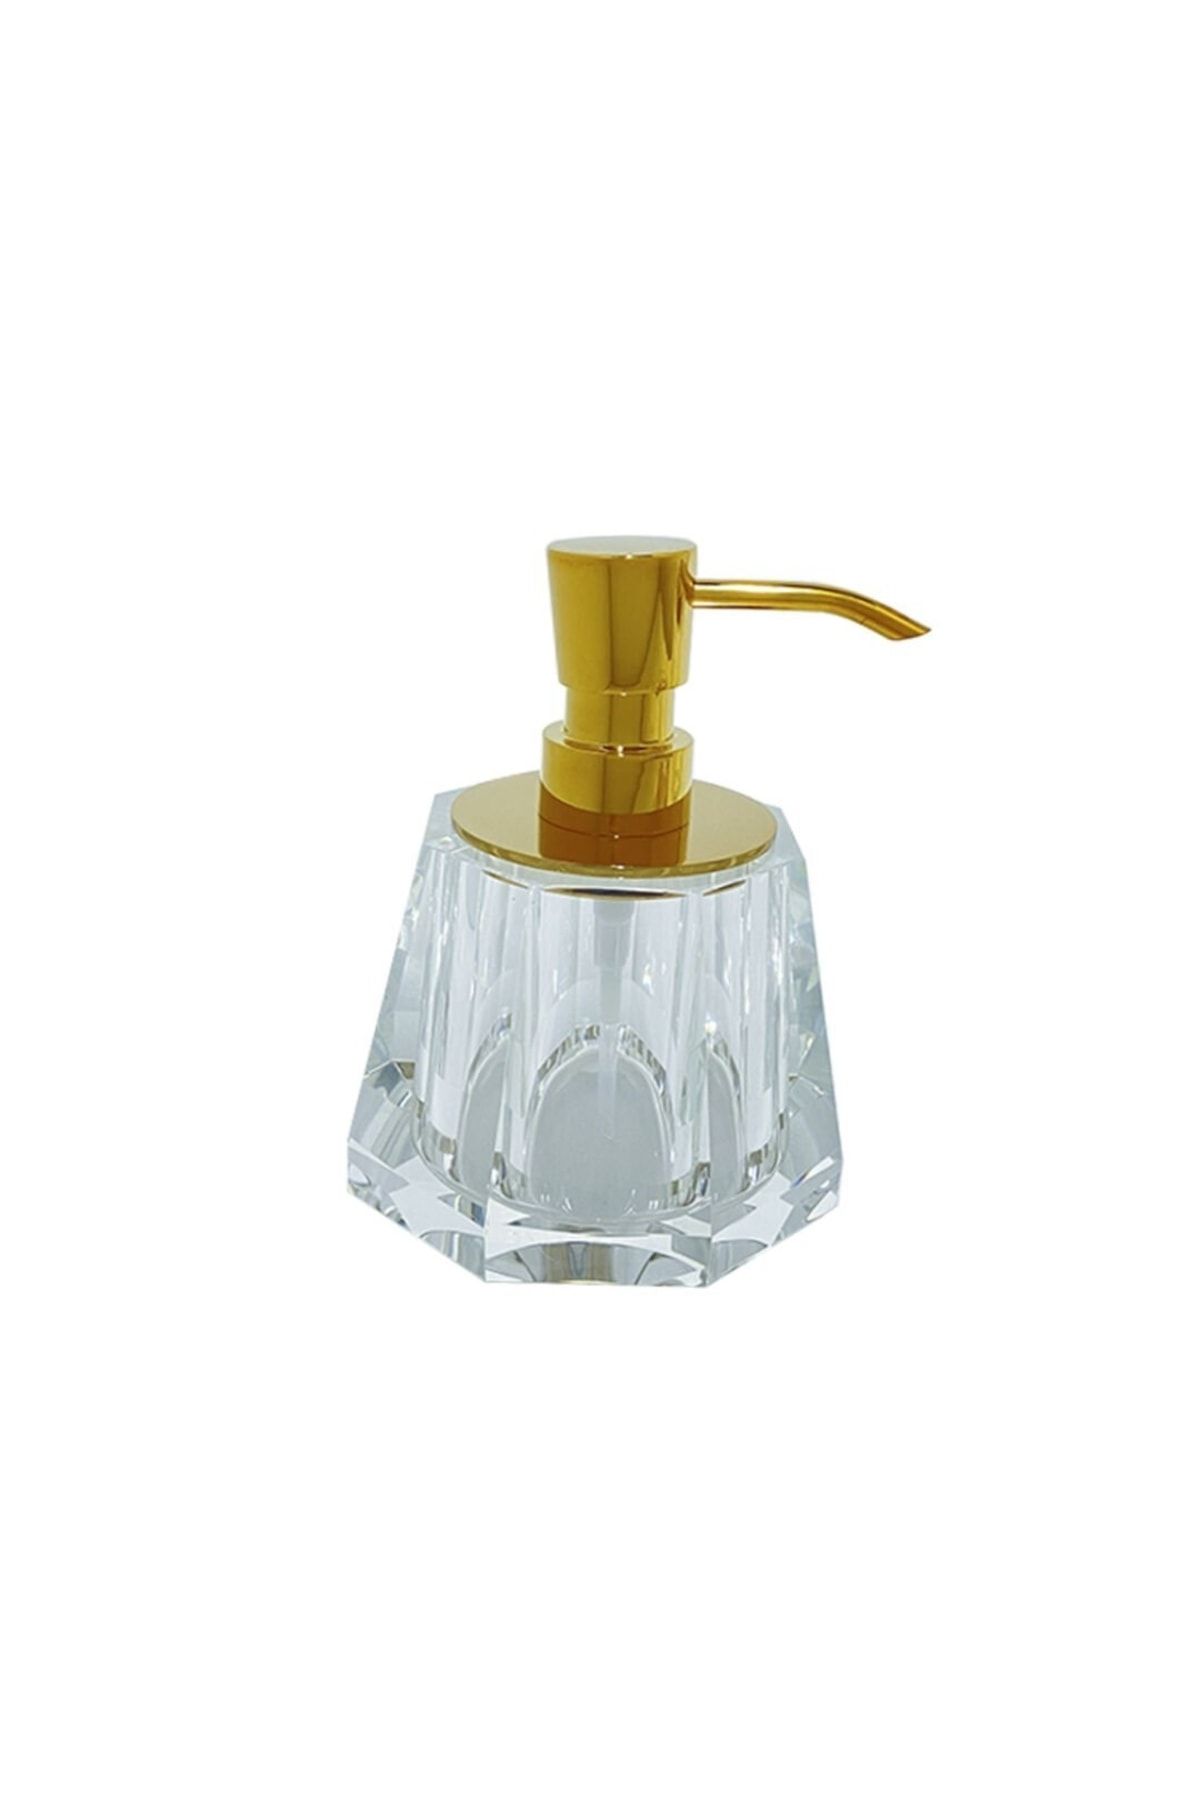 Kristal Sıvı Sabunluk Gold Renk 148X120X120 mm